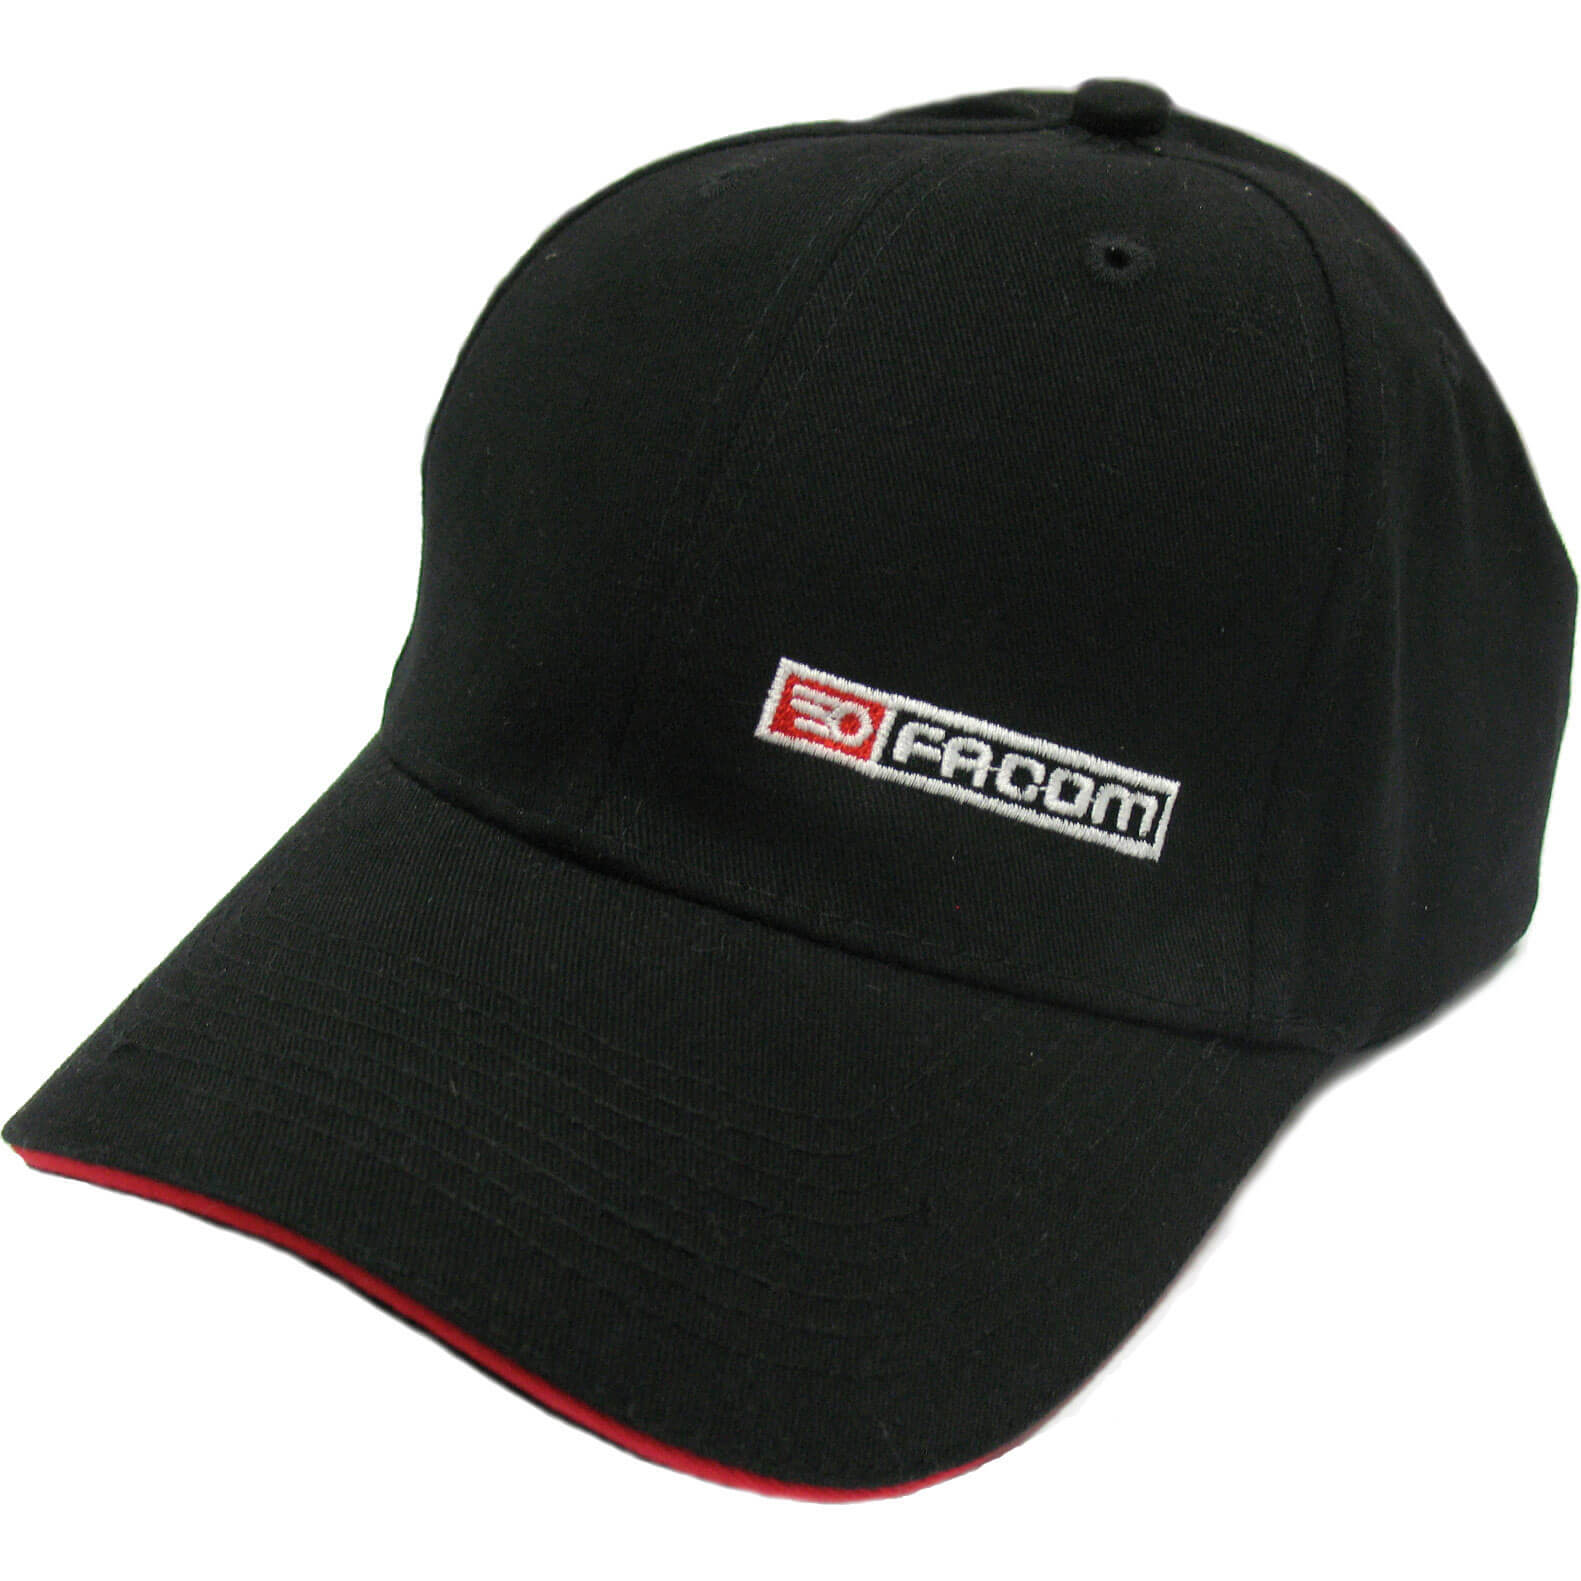 Image of Facom Baseball Cap Black / Red One Size